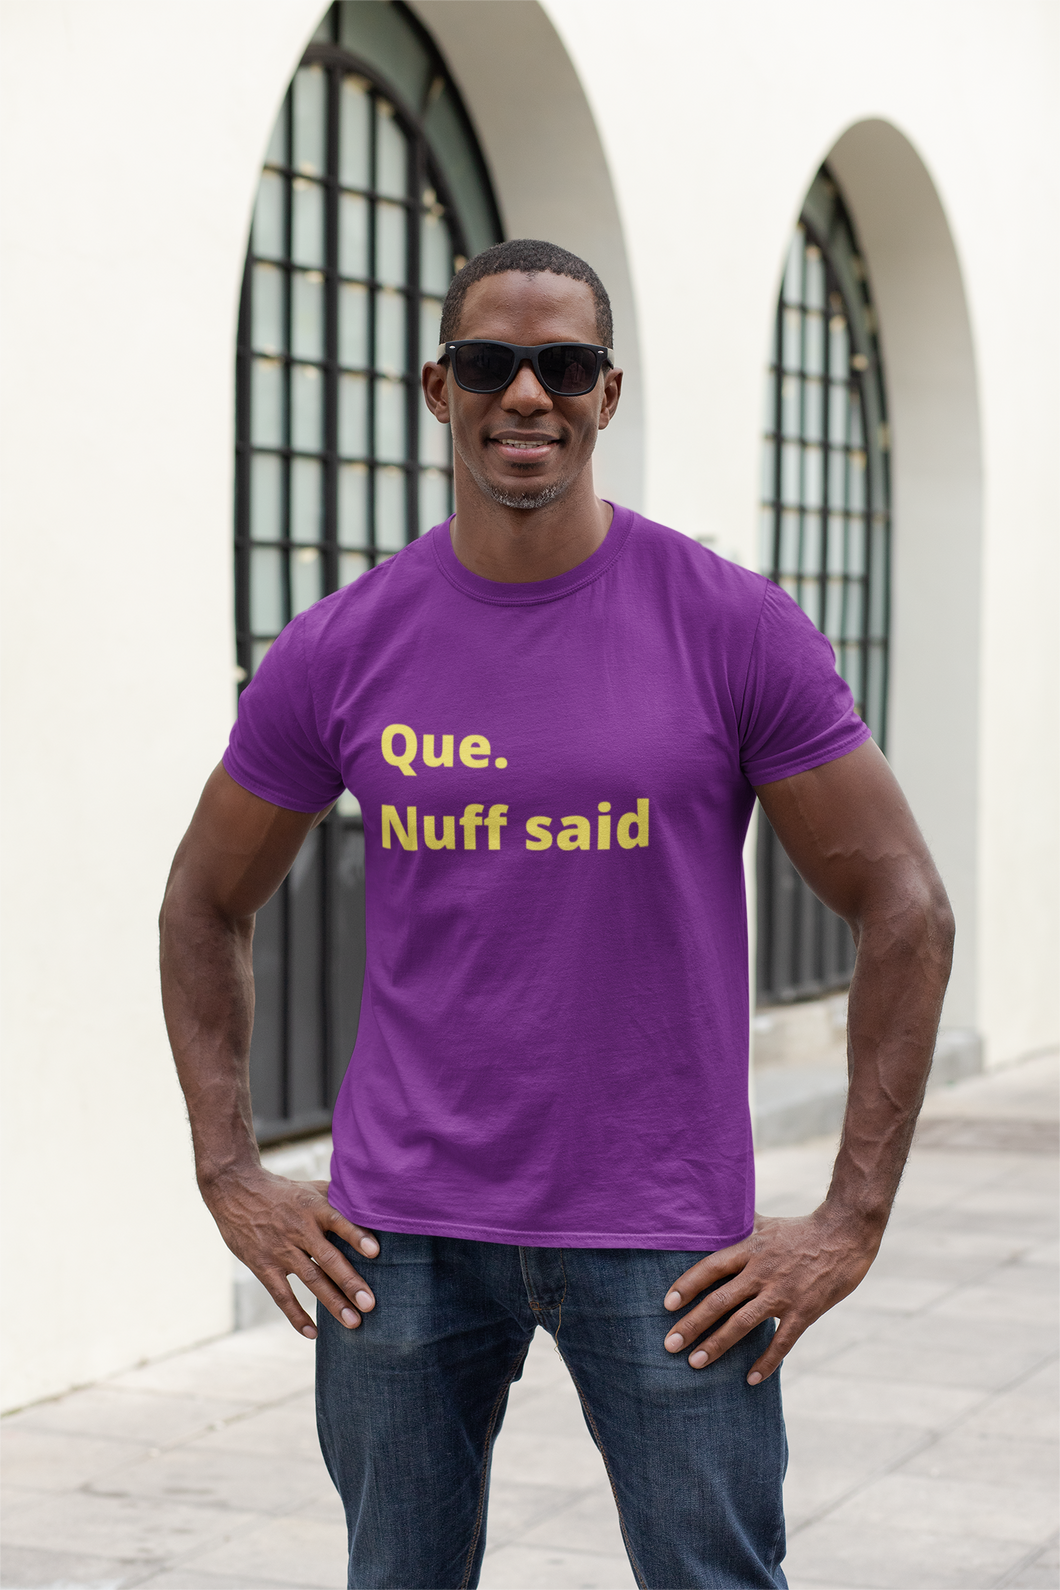 Omega Psi Phi T-Shirts for Men - 2 Styles